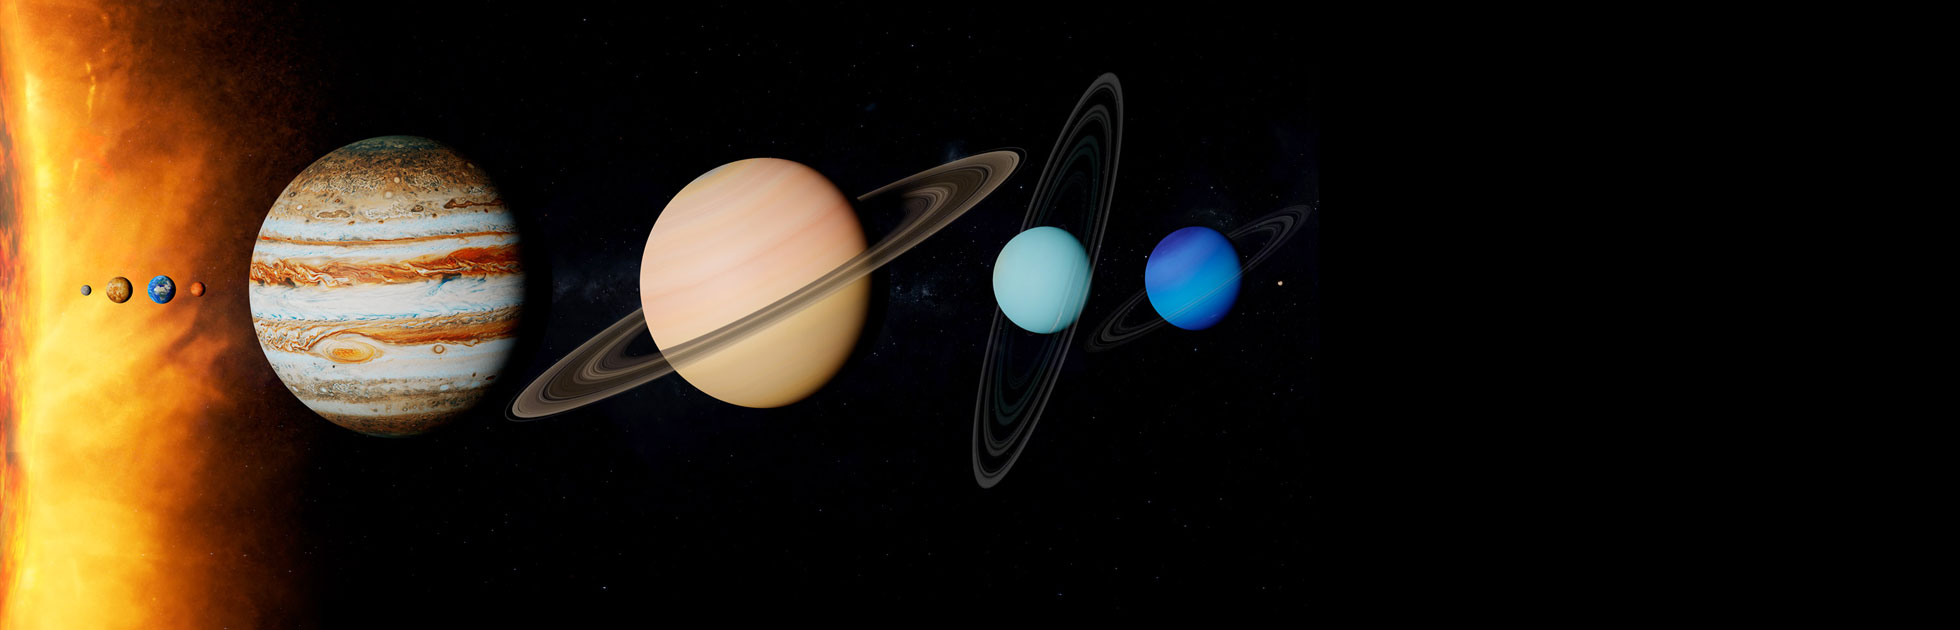 background-solar-system